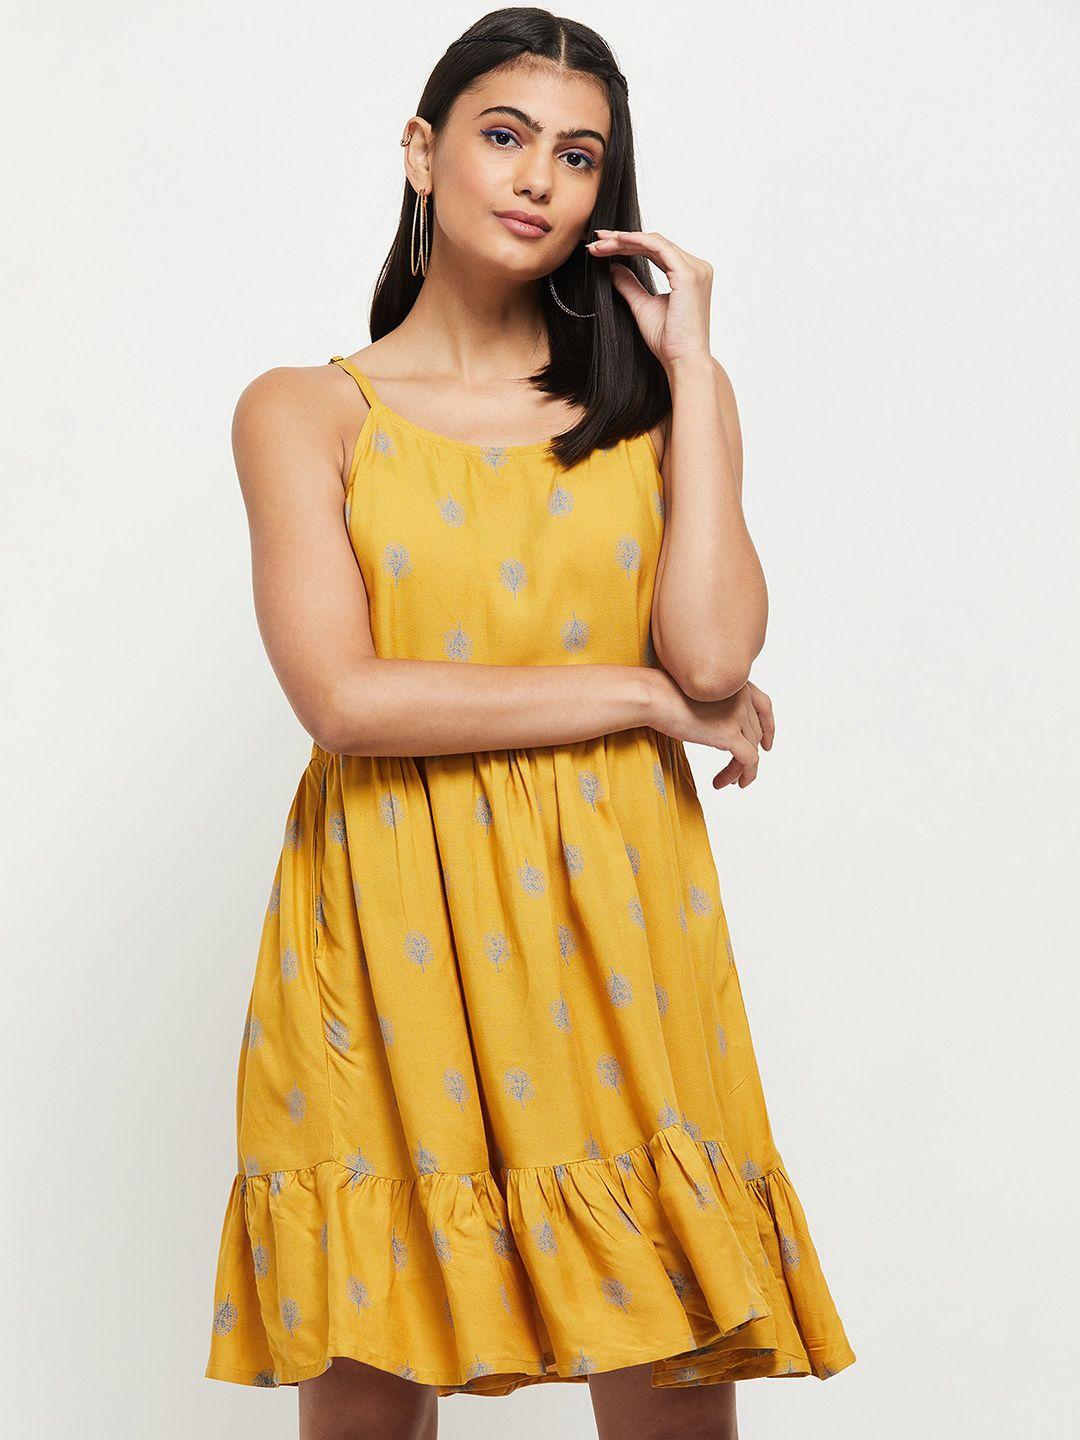 max-mustard-yellow-printed-dress